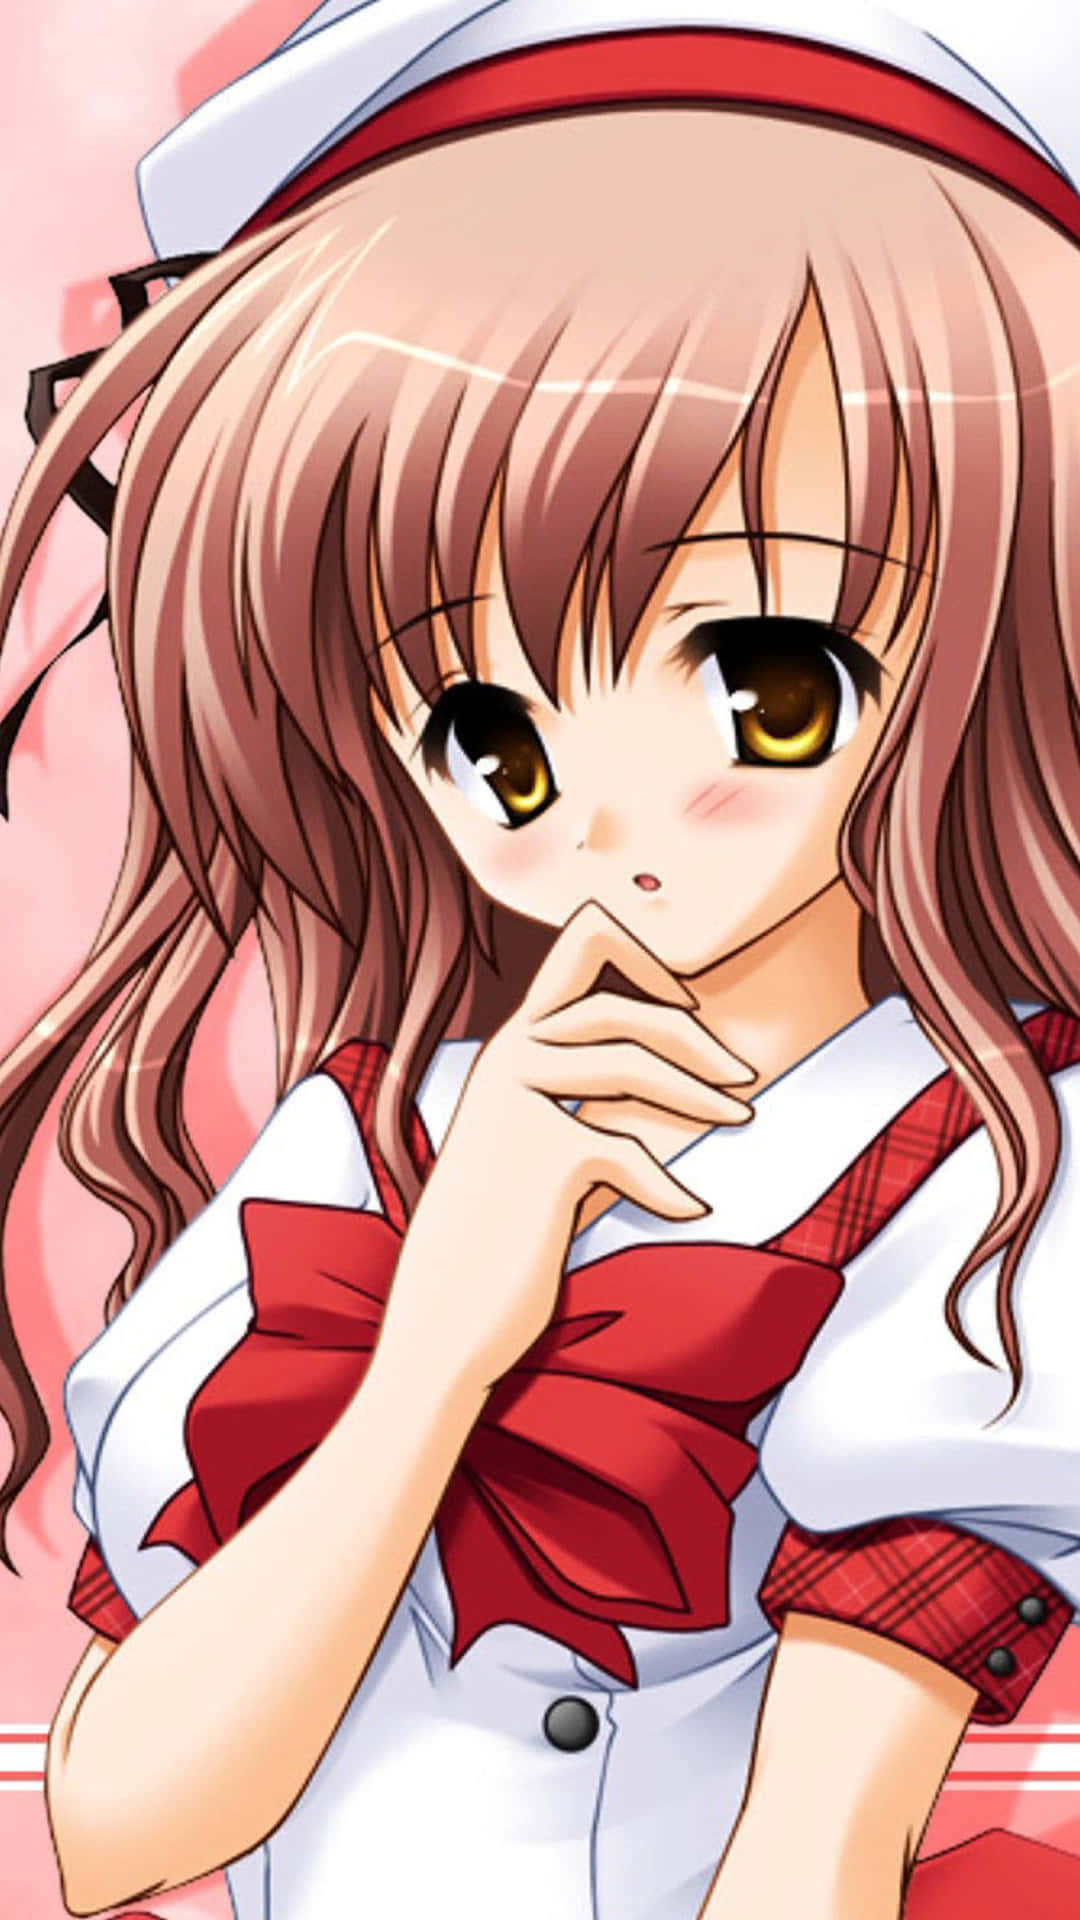 Shy Anime Cartoon Girl Portrait Background